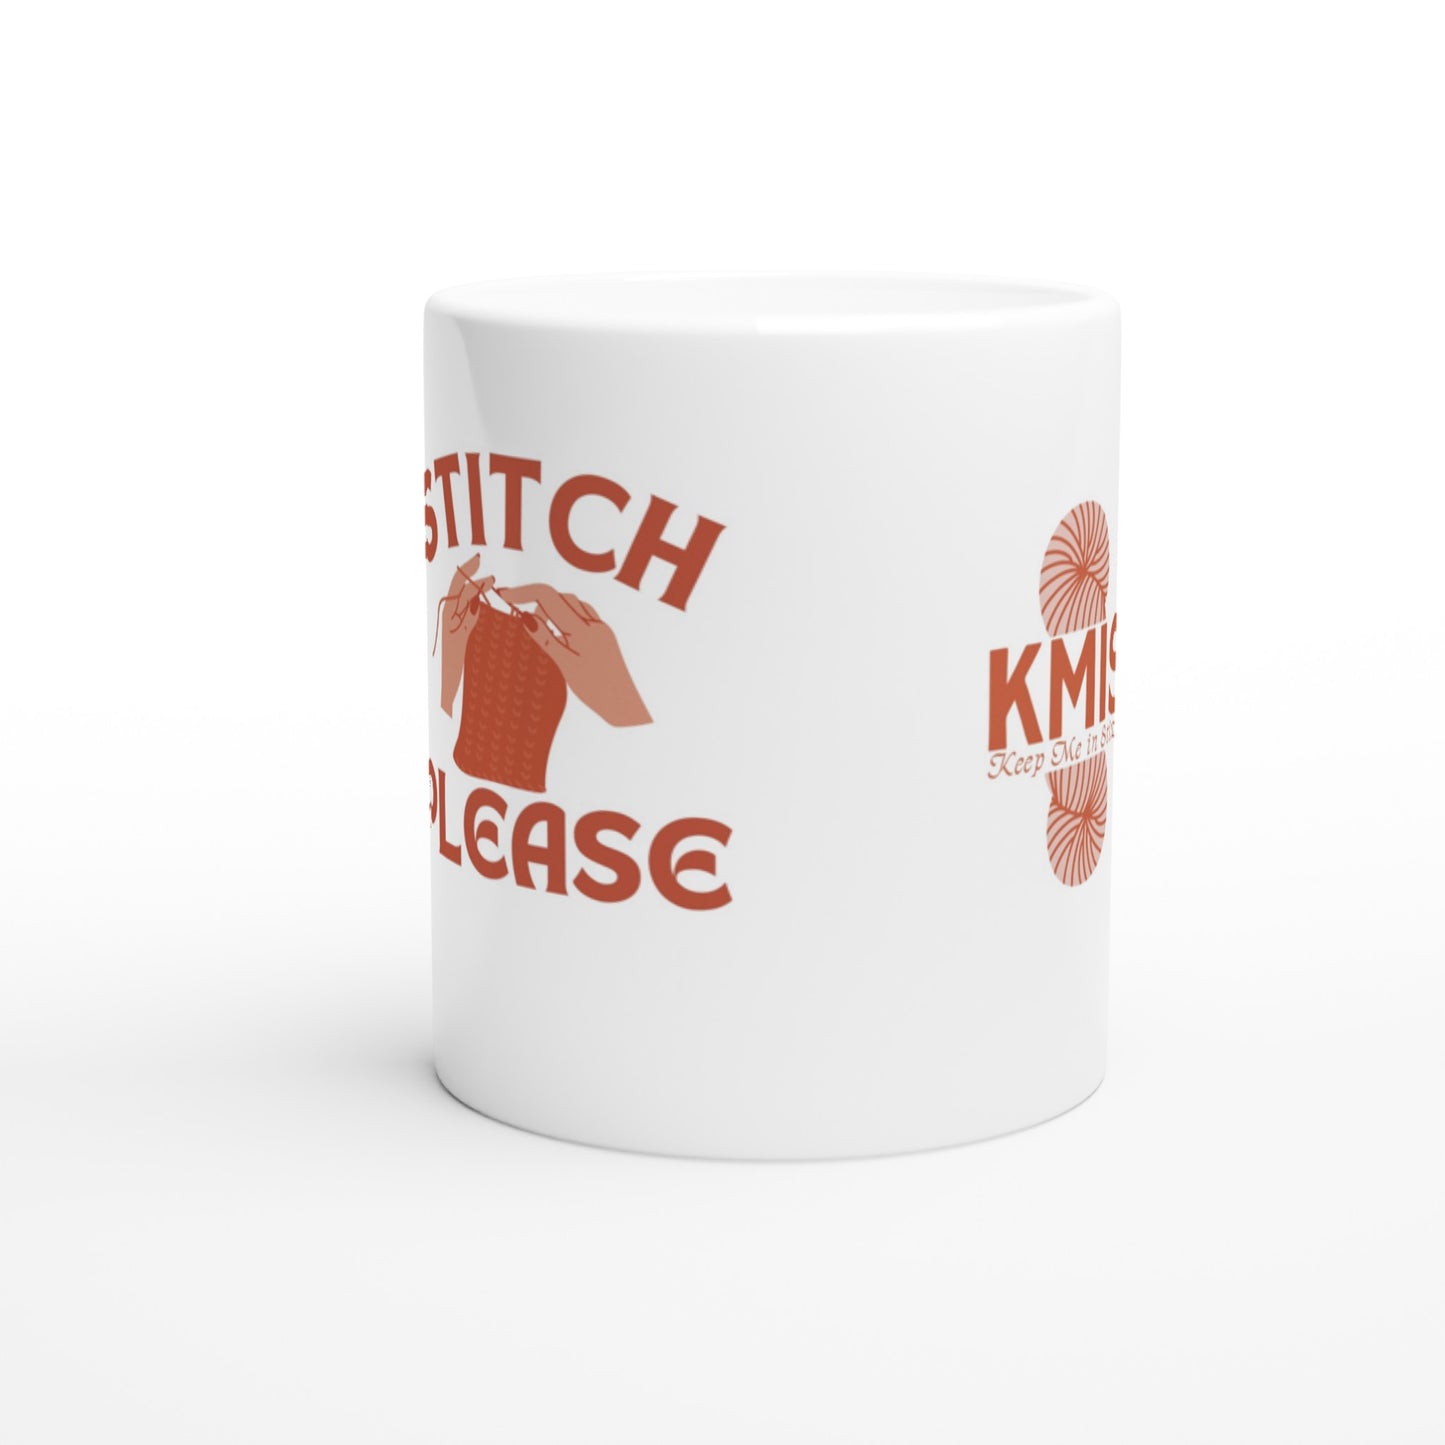 Stitch Please 11oz Ceramic Mug